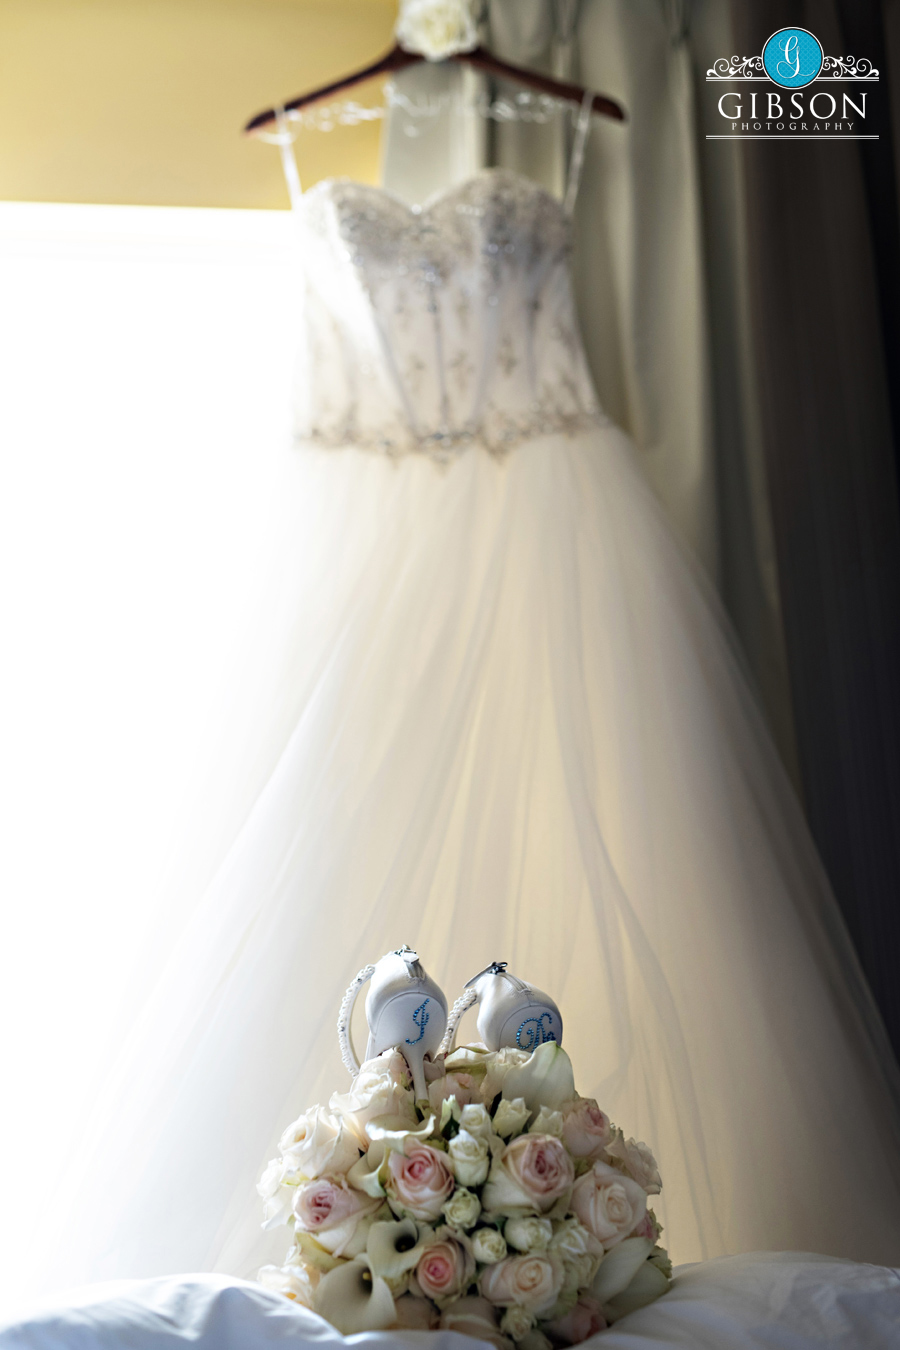 Wedding dress, shoes, details